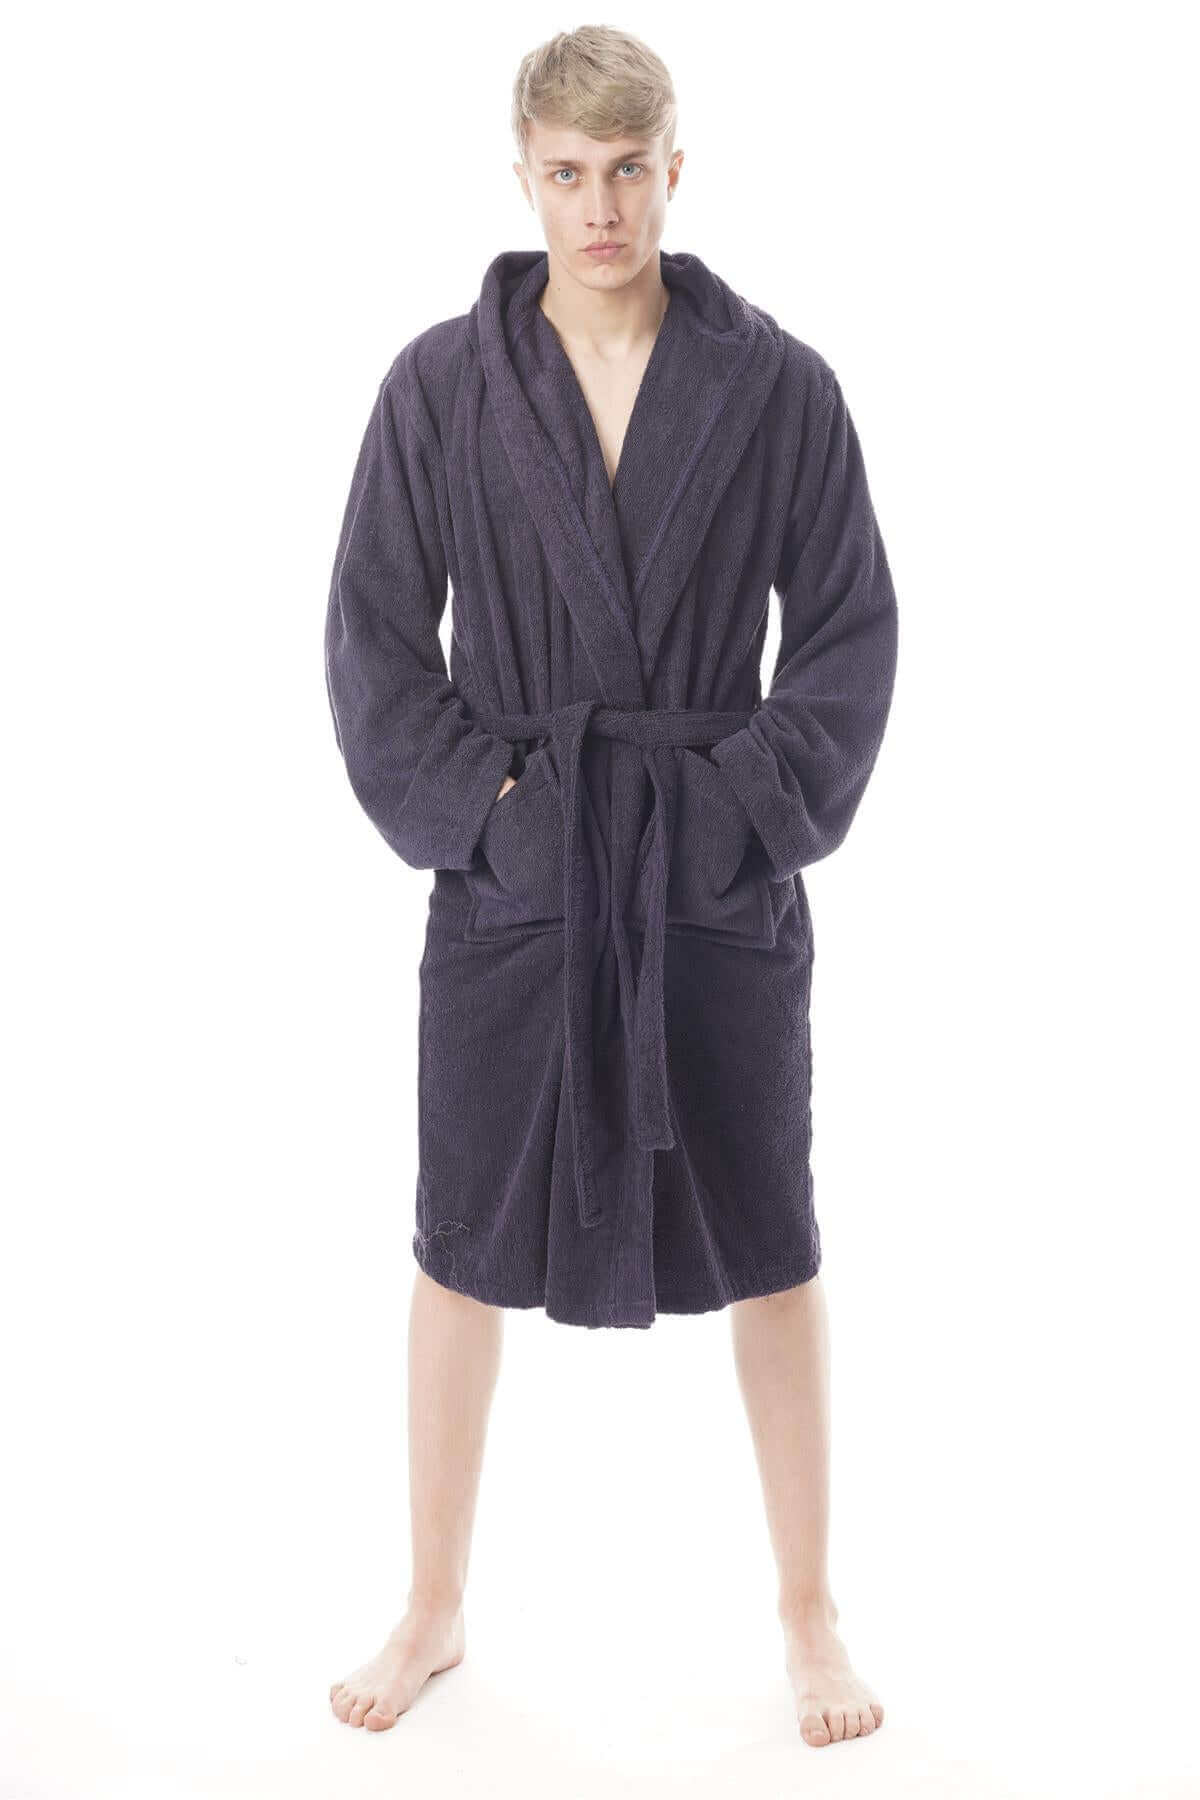 Men's Hooded Robe Super Soft Long Flannel Bathrobe Dressing Gown. Buy now for £15.00. A Robe by Toro Rocco. assorted, bathrobe, black, boys, charcoal, comfortable, dressing gown, flannel, fleece, gym, hooded, hoodie, hotel, large, loungewear, medium, mens